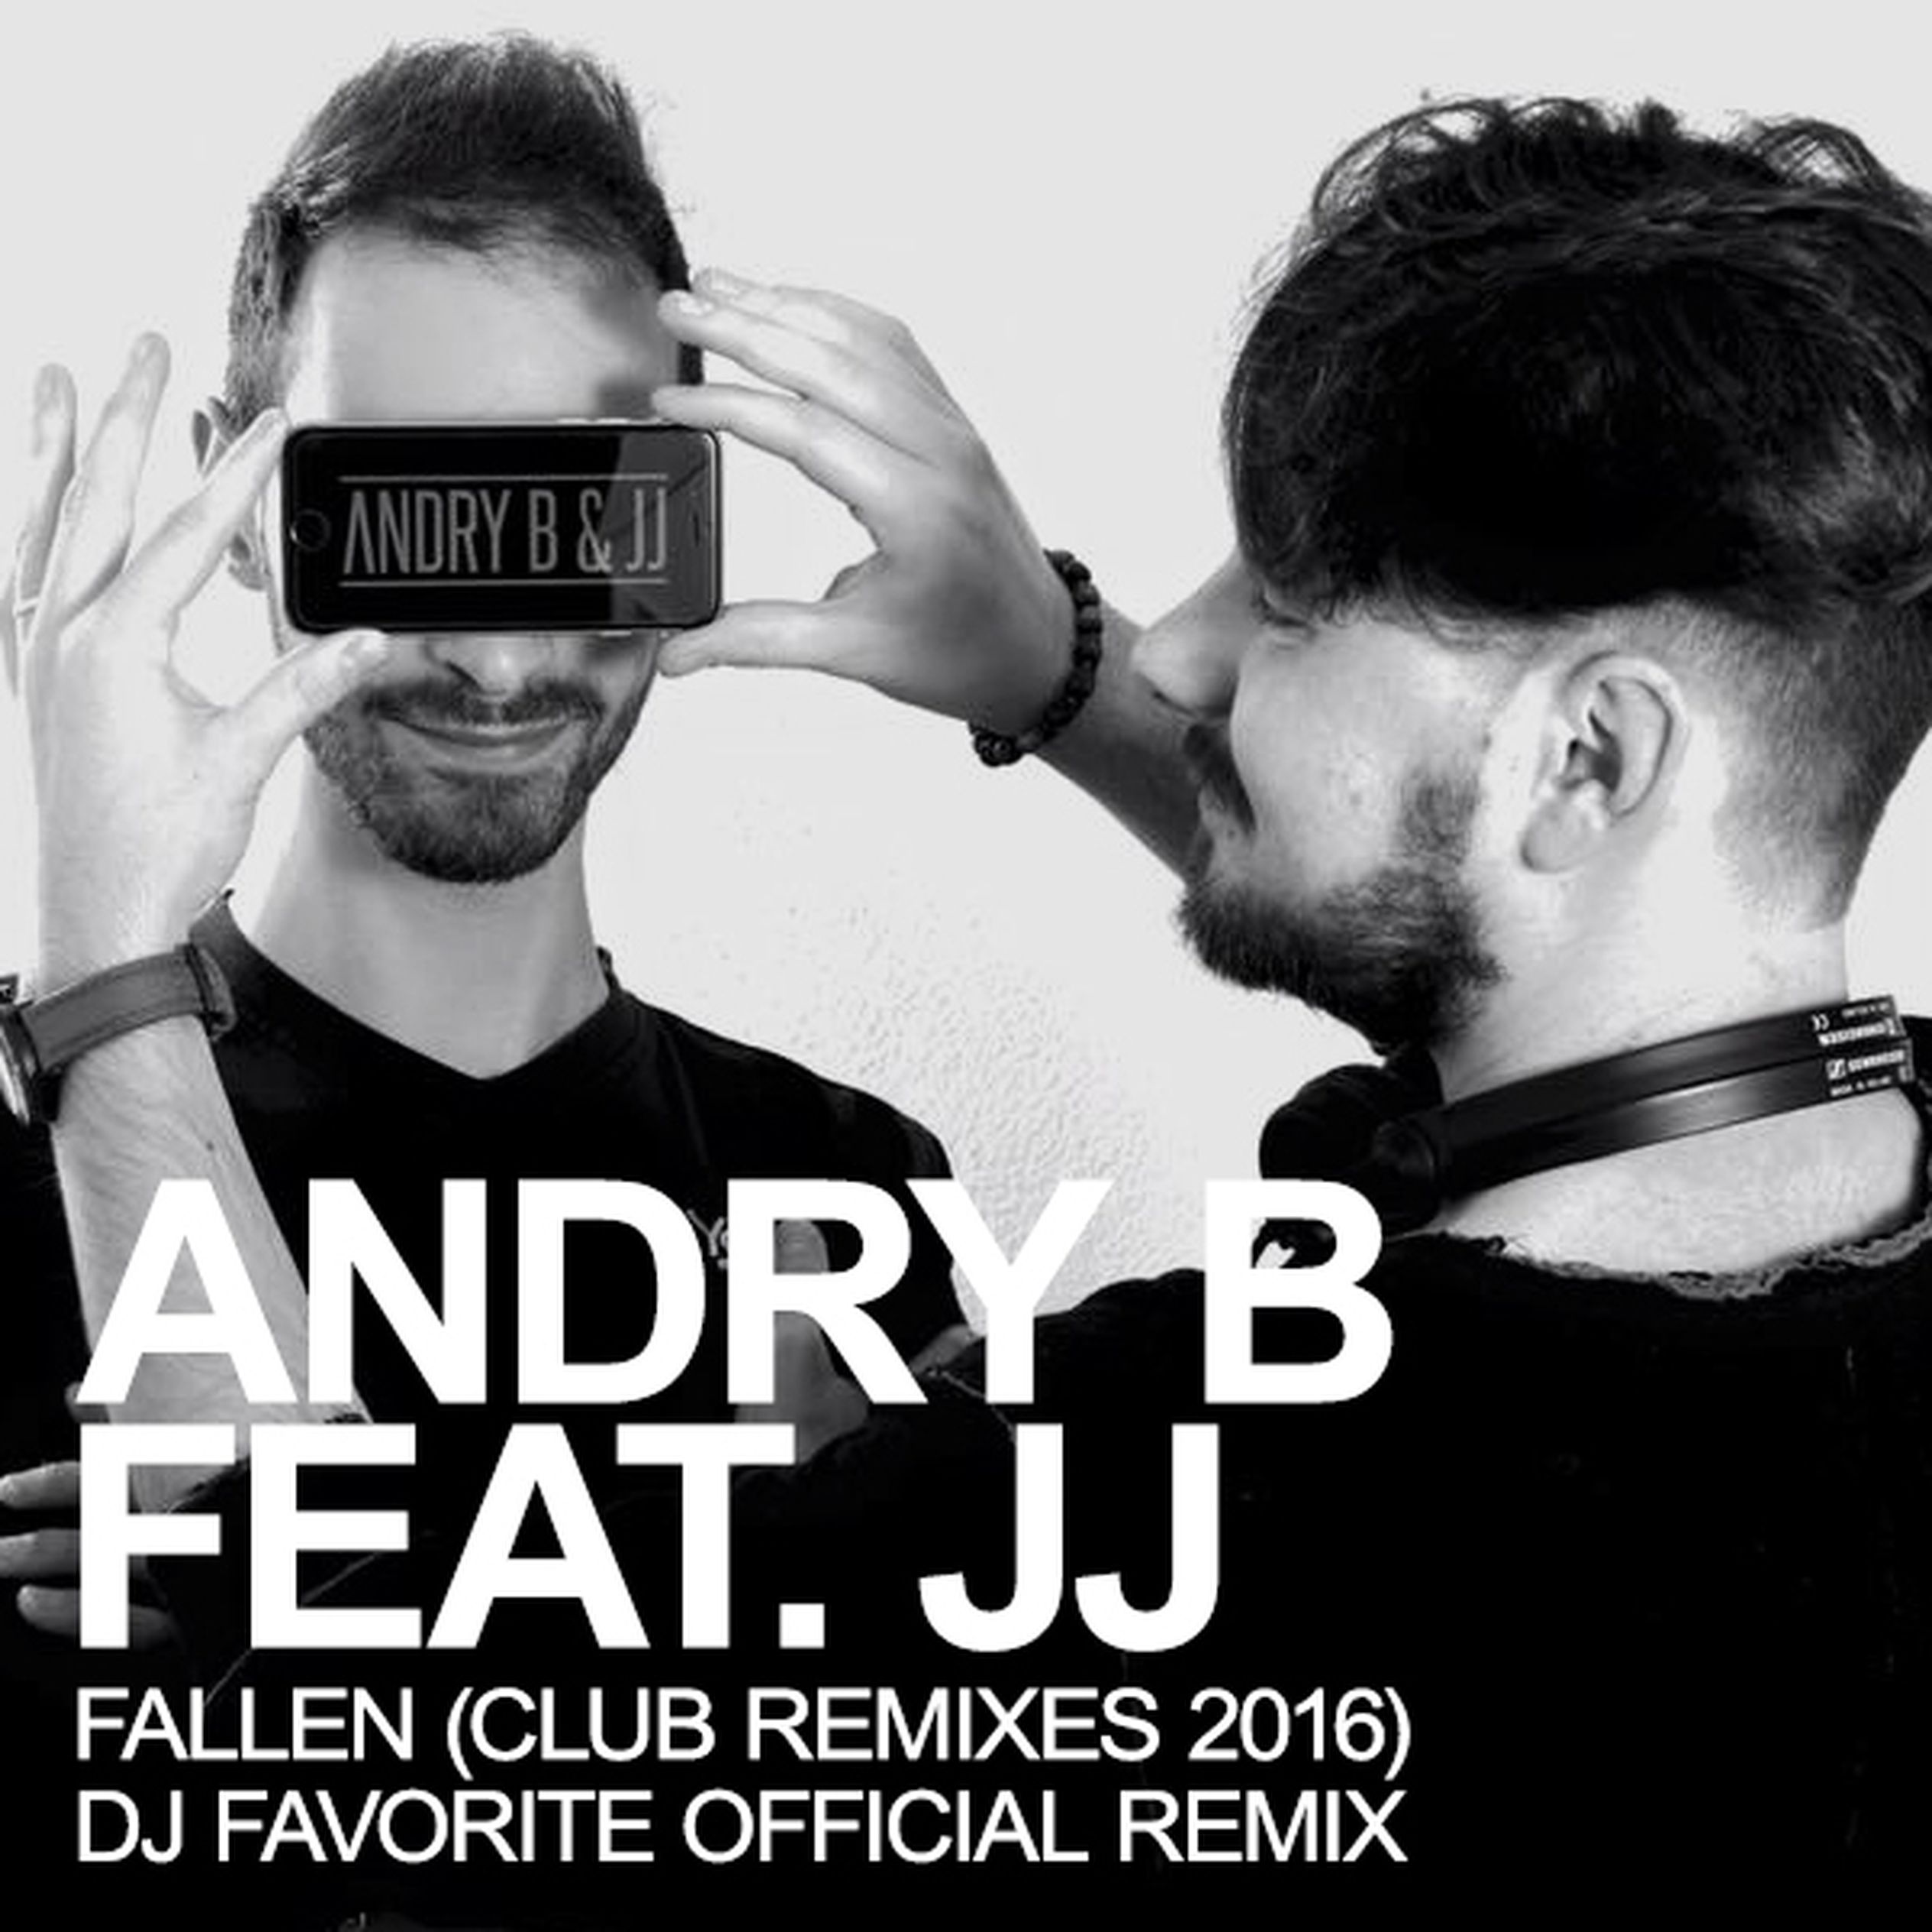 Deep remix mp3. DJ favorite Official Remixes. Fallin DJ. Andry b., JJ - Fallen (DJ Antonio Remix).mp3 обложка альбома. Диджей Fallen рок Хаус.